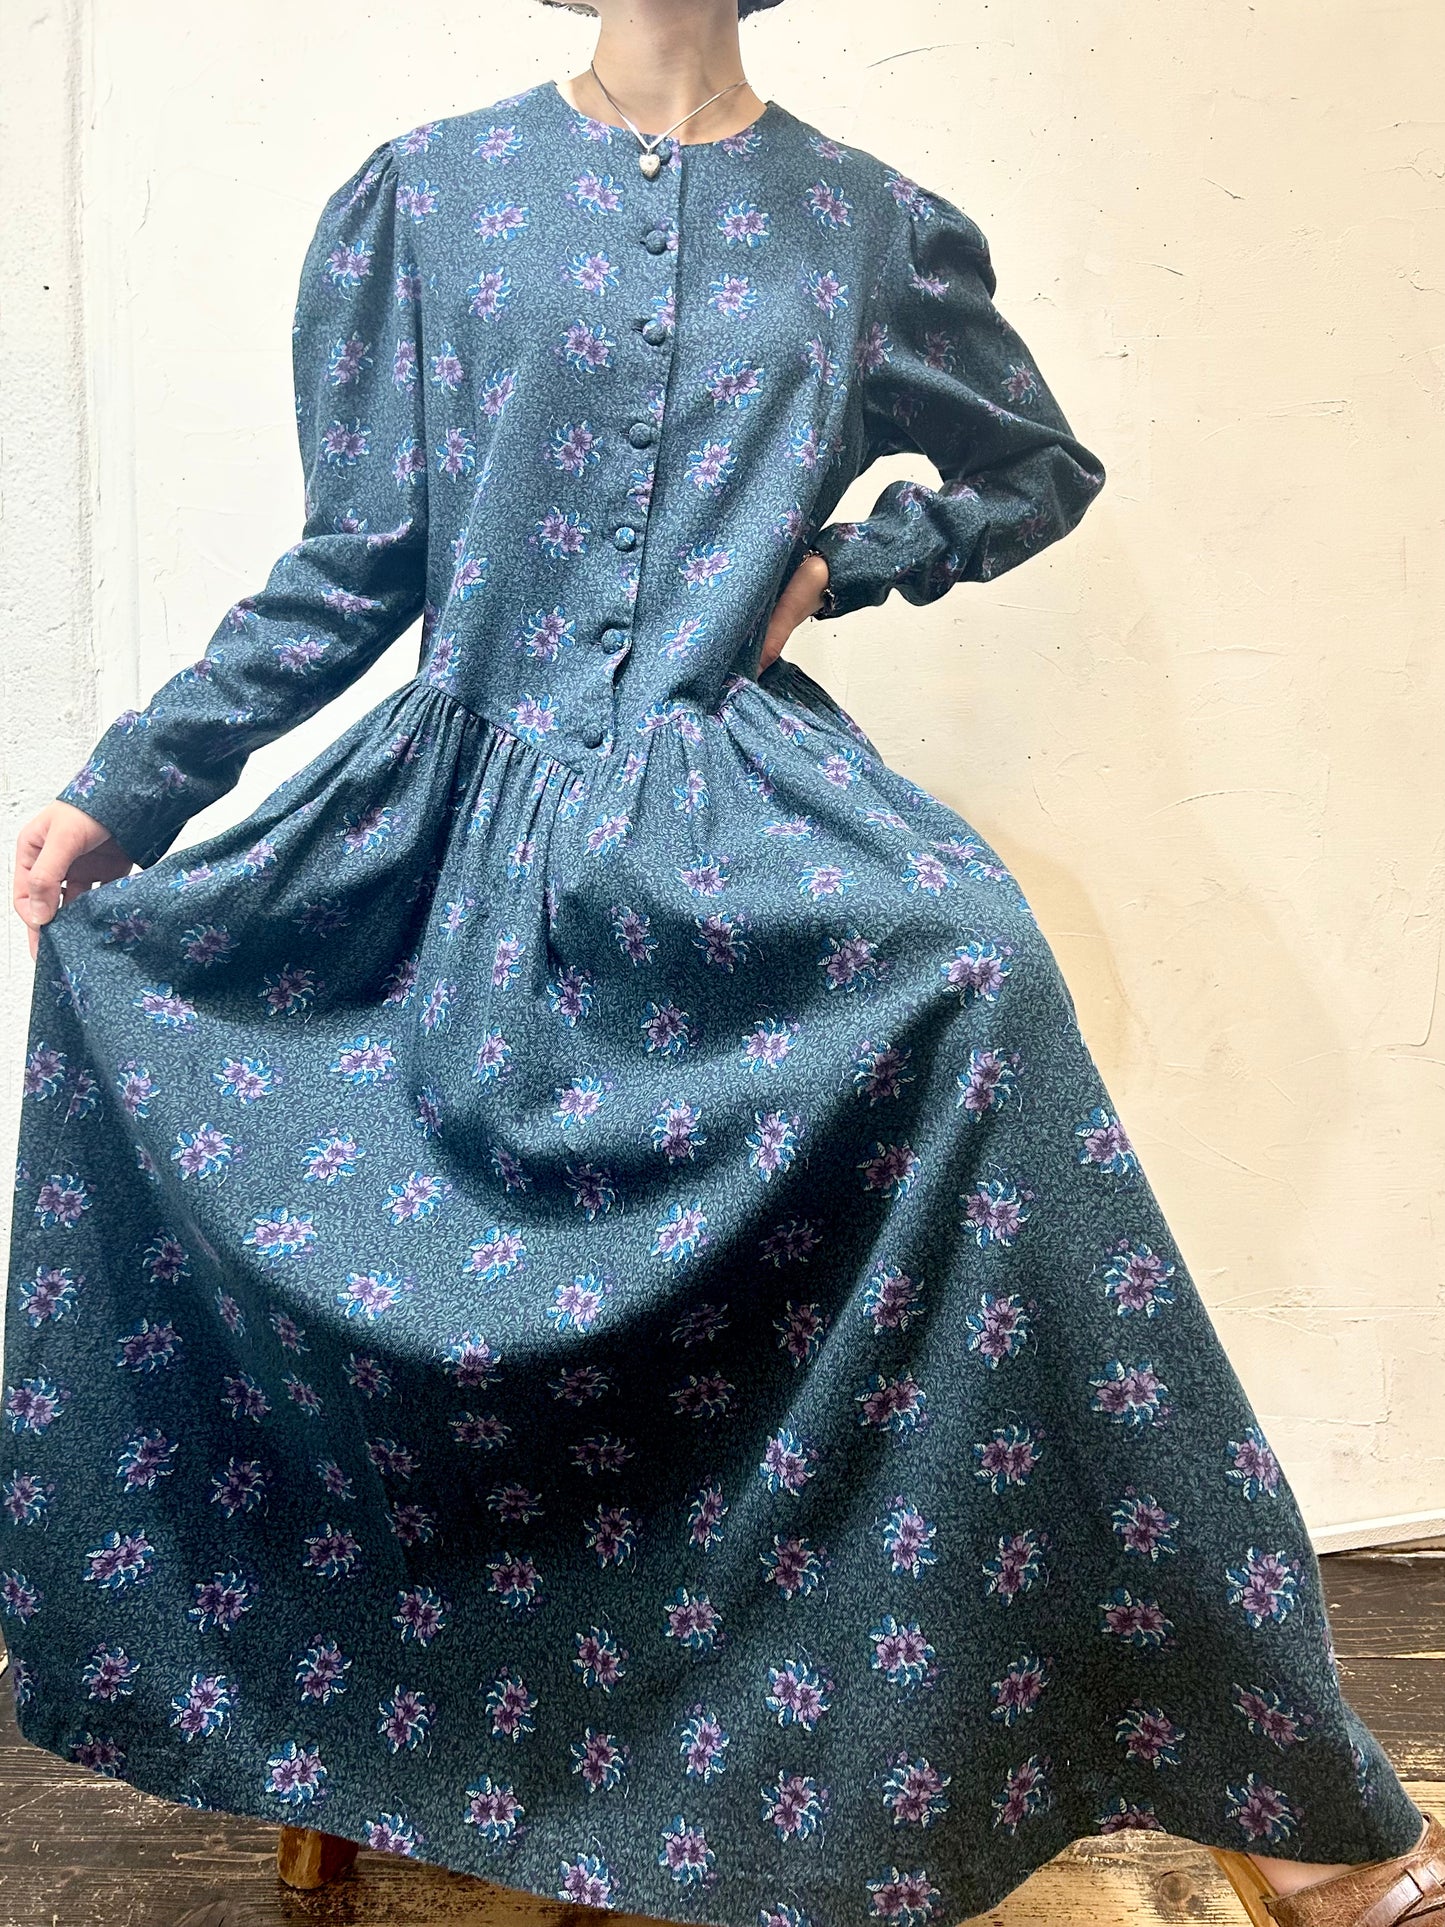 Vintage Flower Dress 〜Laura Ashley〜 [H24877]